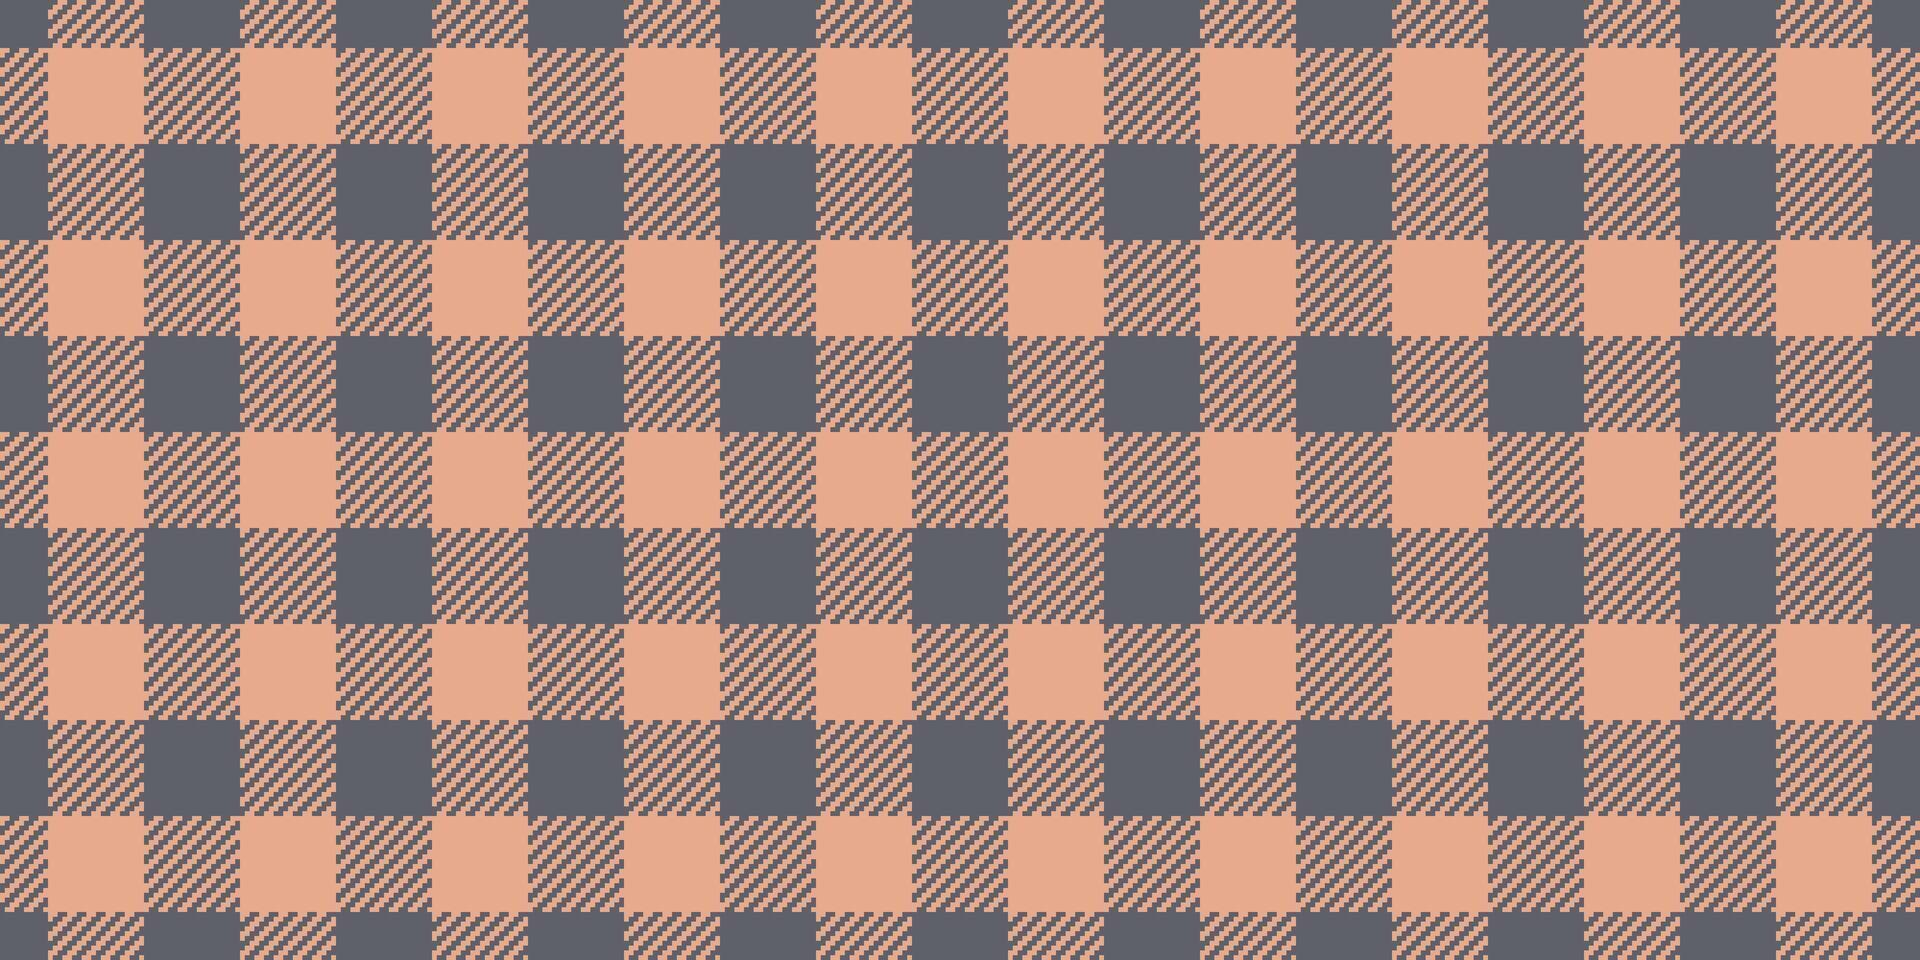 minúsculo tartan Verifica tecido, decoração desatado fundo têxtil. roupa masculina xadrez vetor padronizar textura dentro pastel e laranja cores.